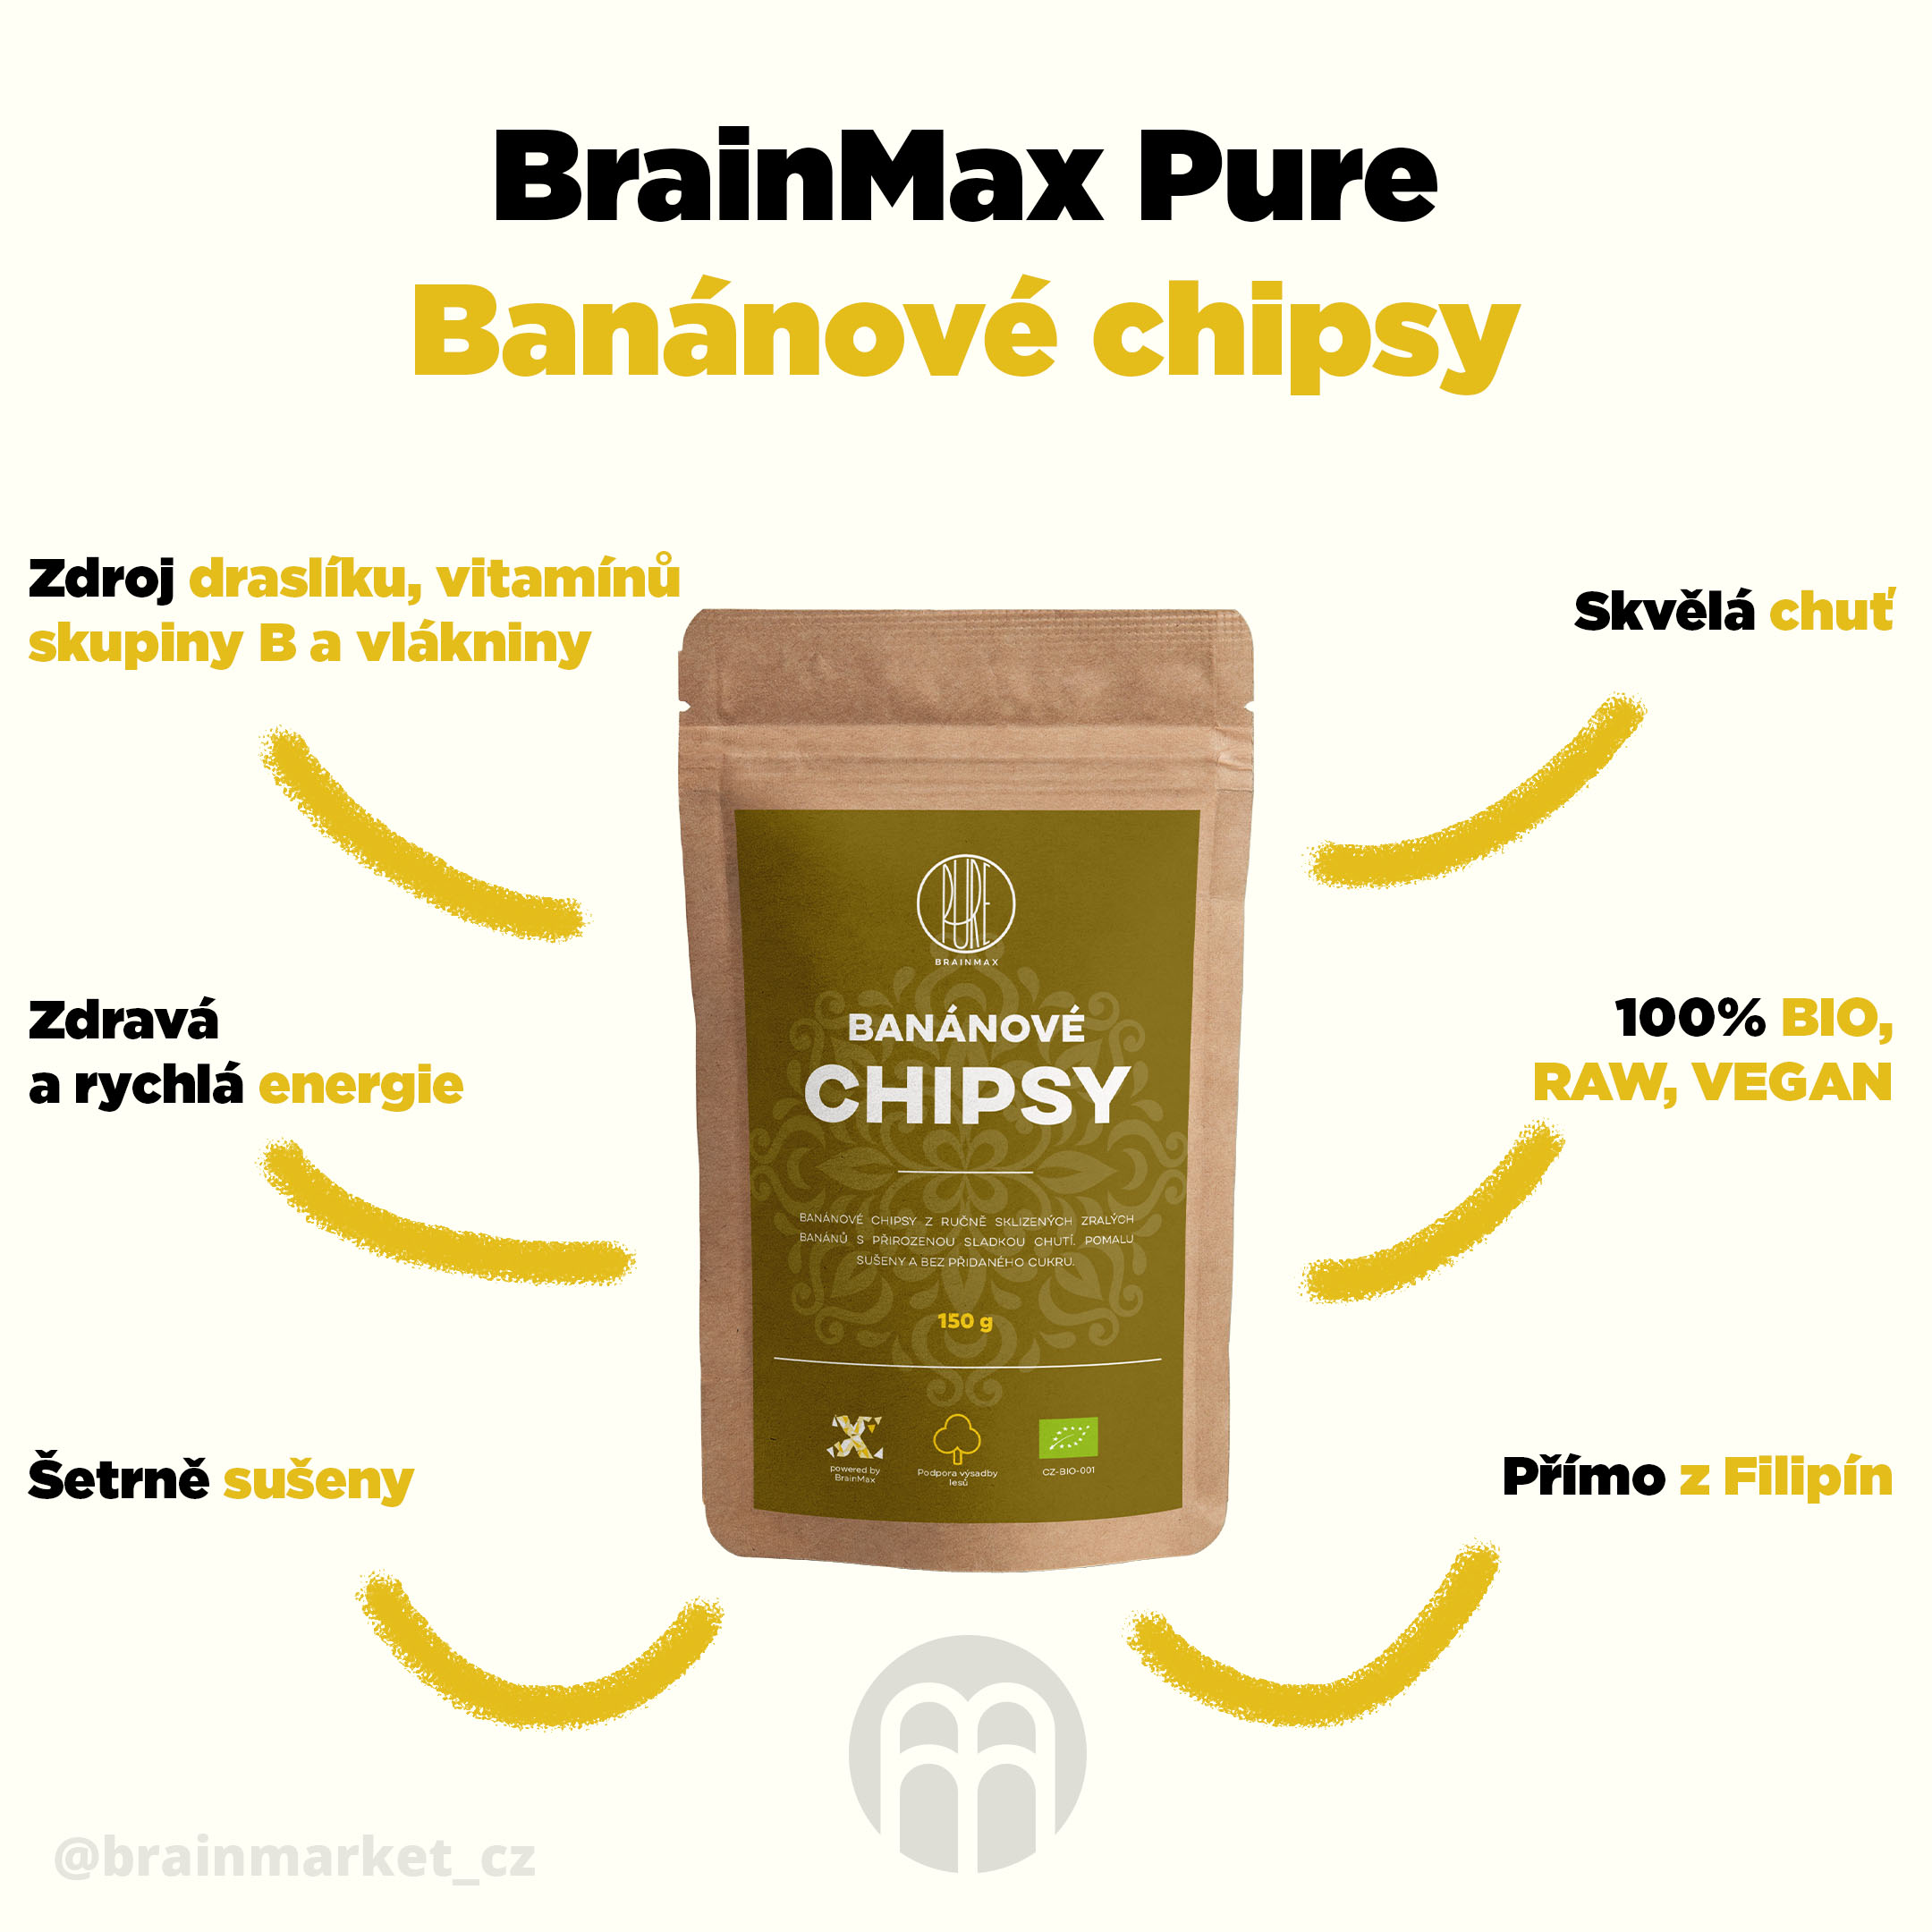 BrainMax Pure banánové chipsy